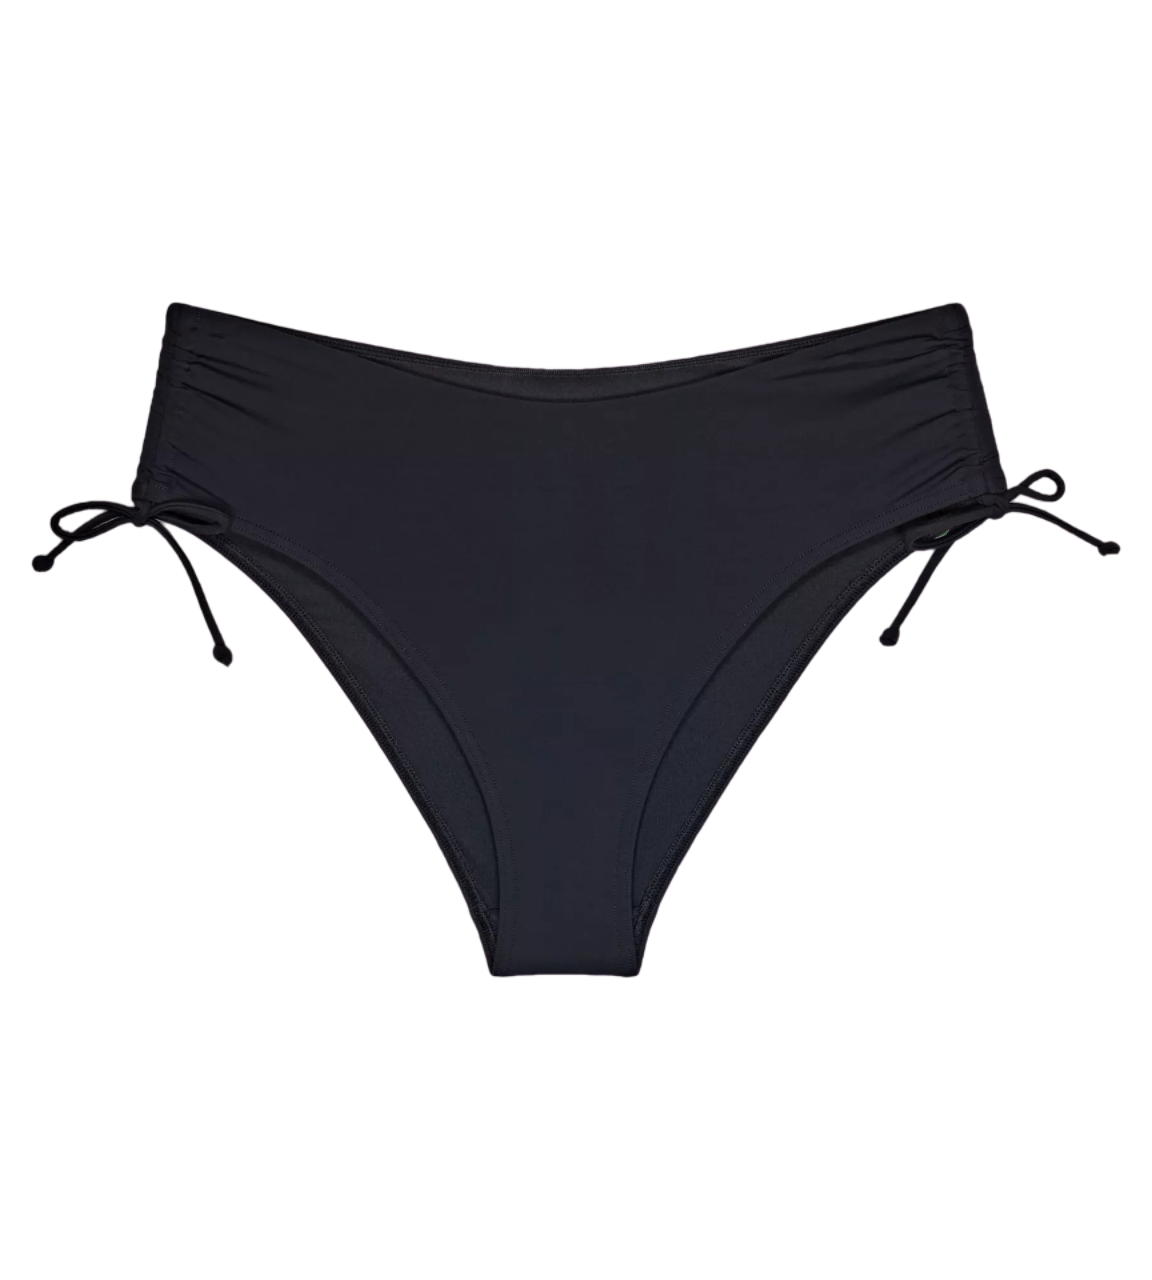 Dámské plavkové kalhotky Summer Allure Maxi sd - BLACK - černé 0004 - TRIUMPH BLACK 38